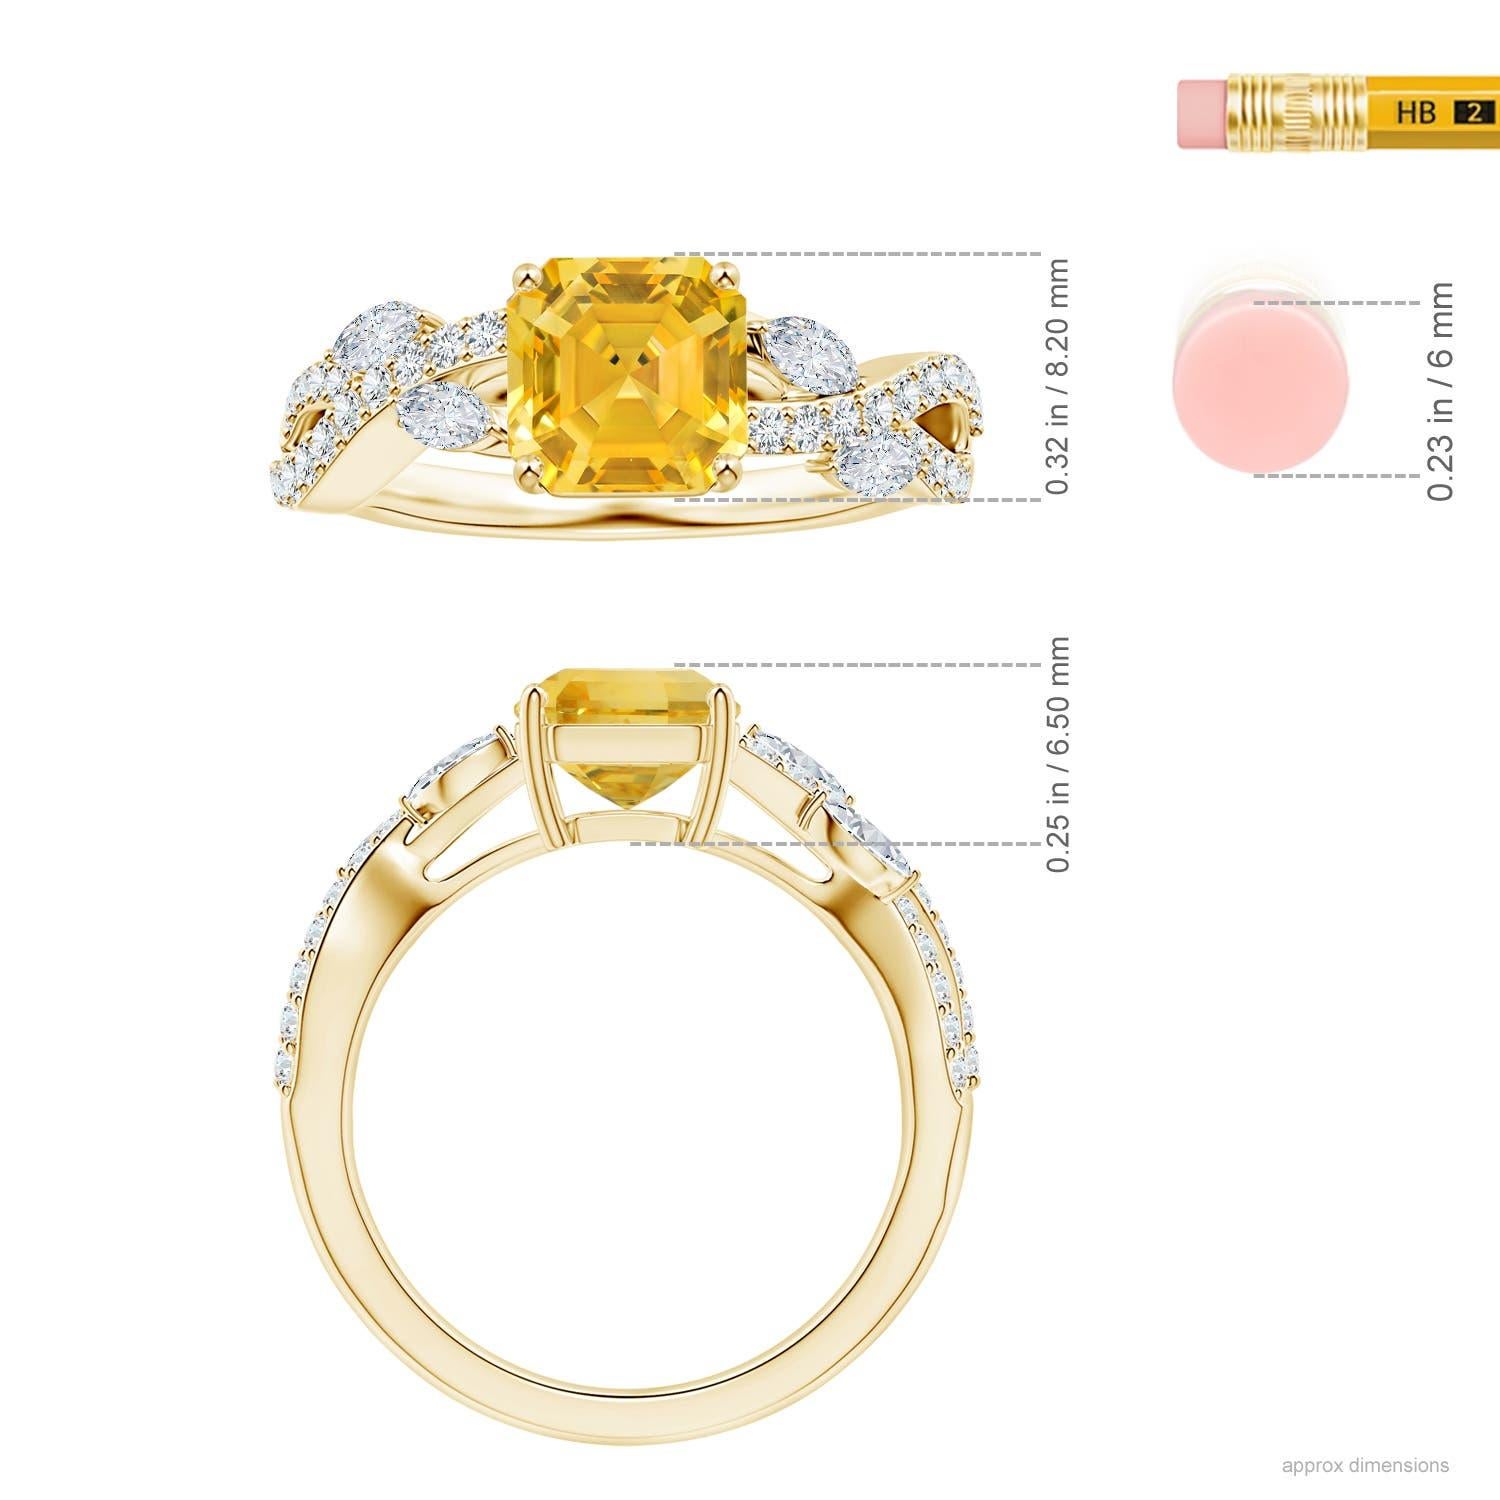 For Sale:  Angara Gia Certified Emerald-Cut Yellow Sapphire Diamond Ring in Yellow Gold 5